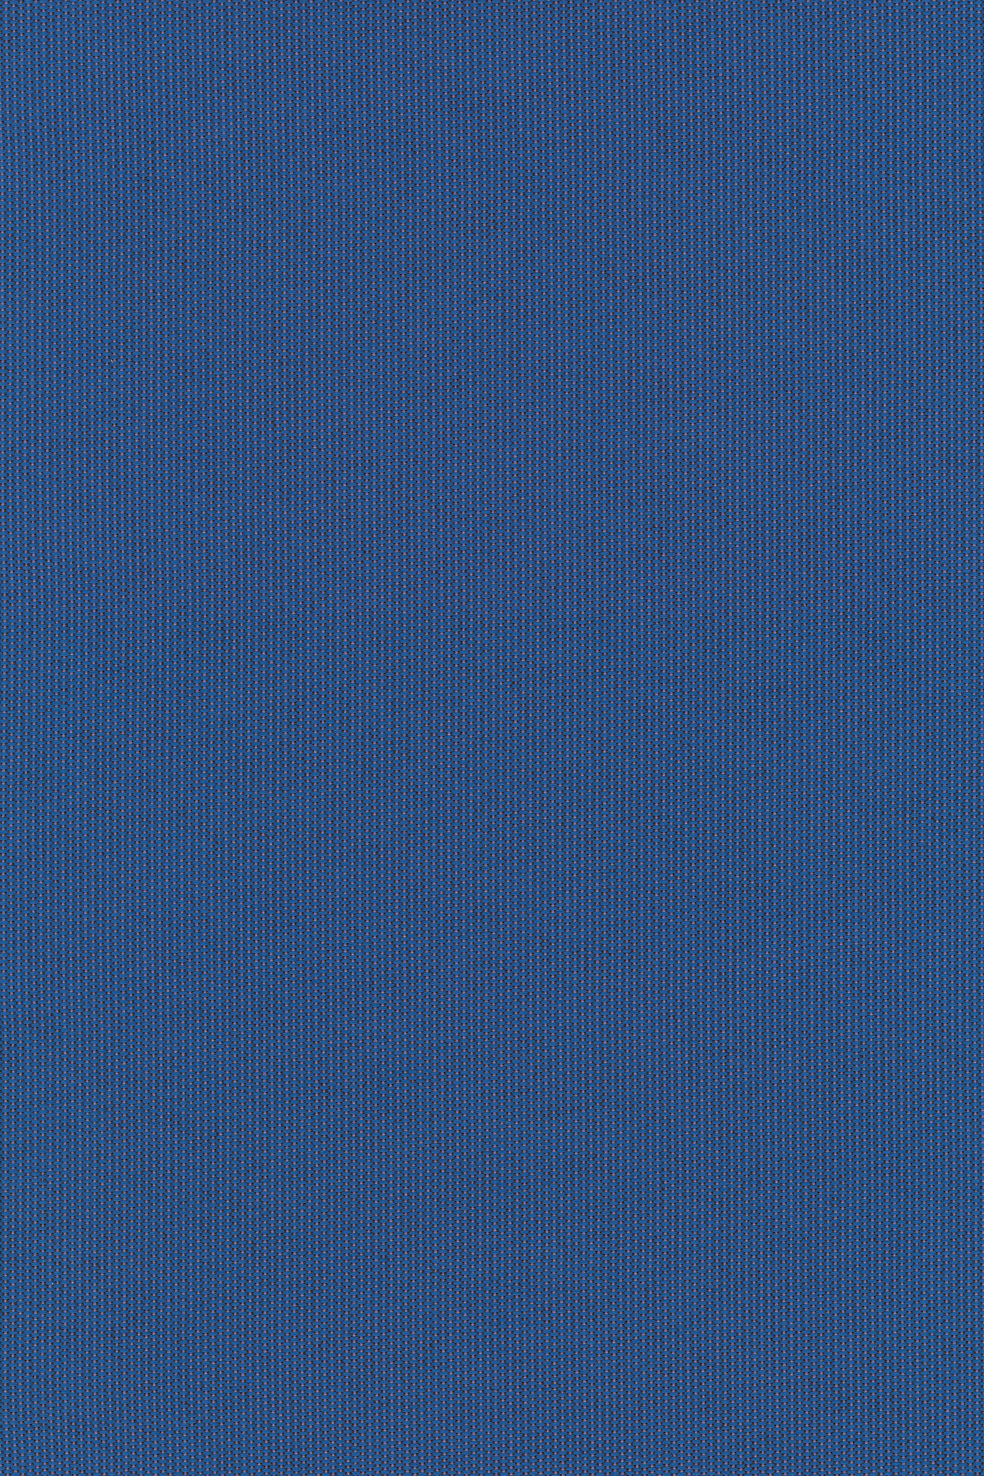 Fabric sample Patio Outdoor 750 blue